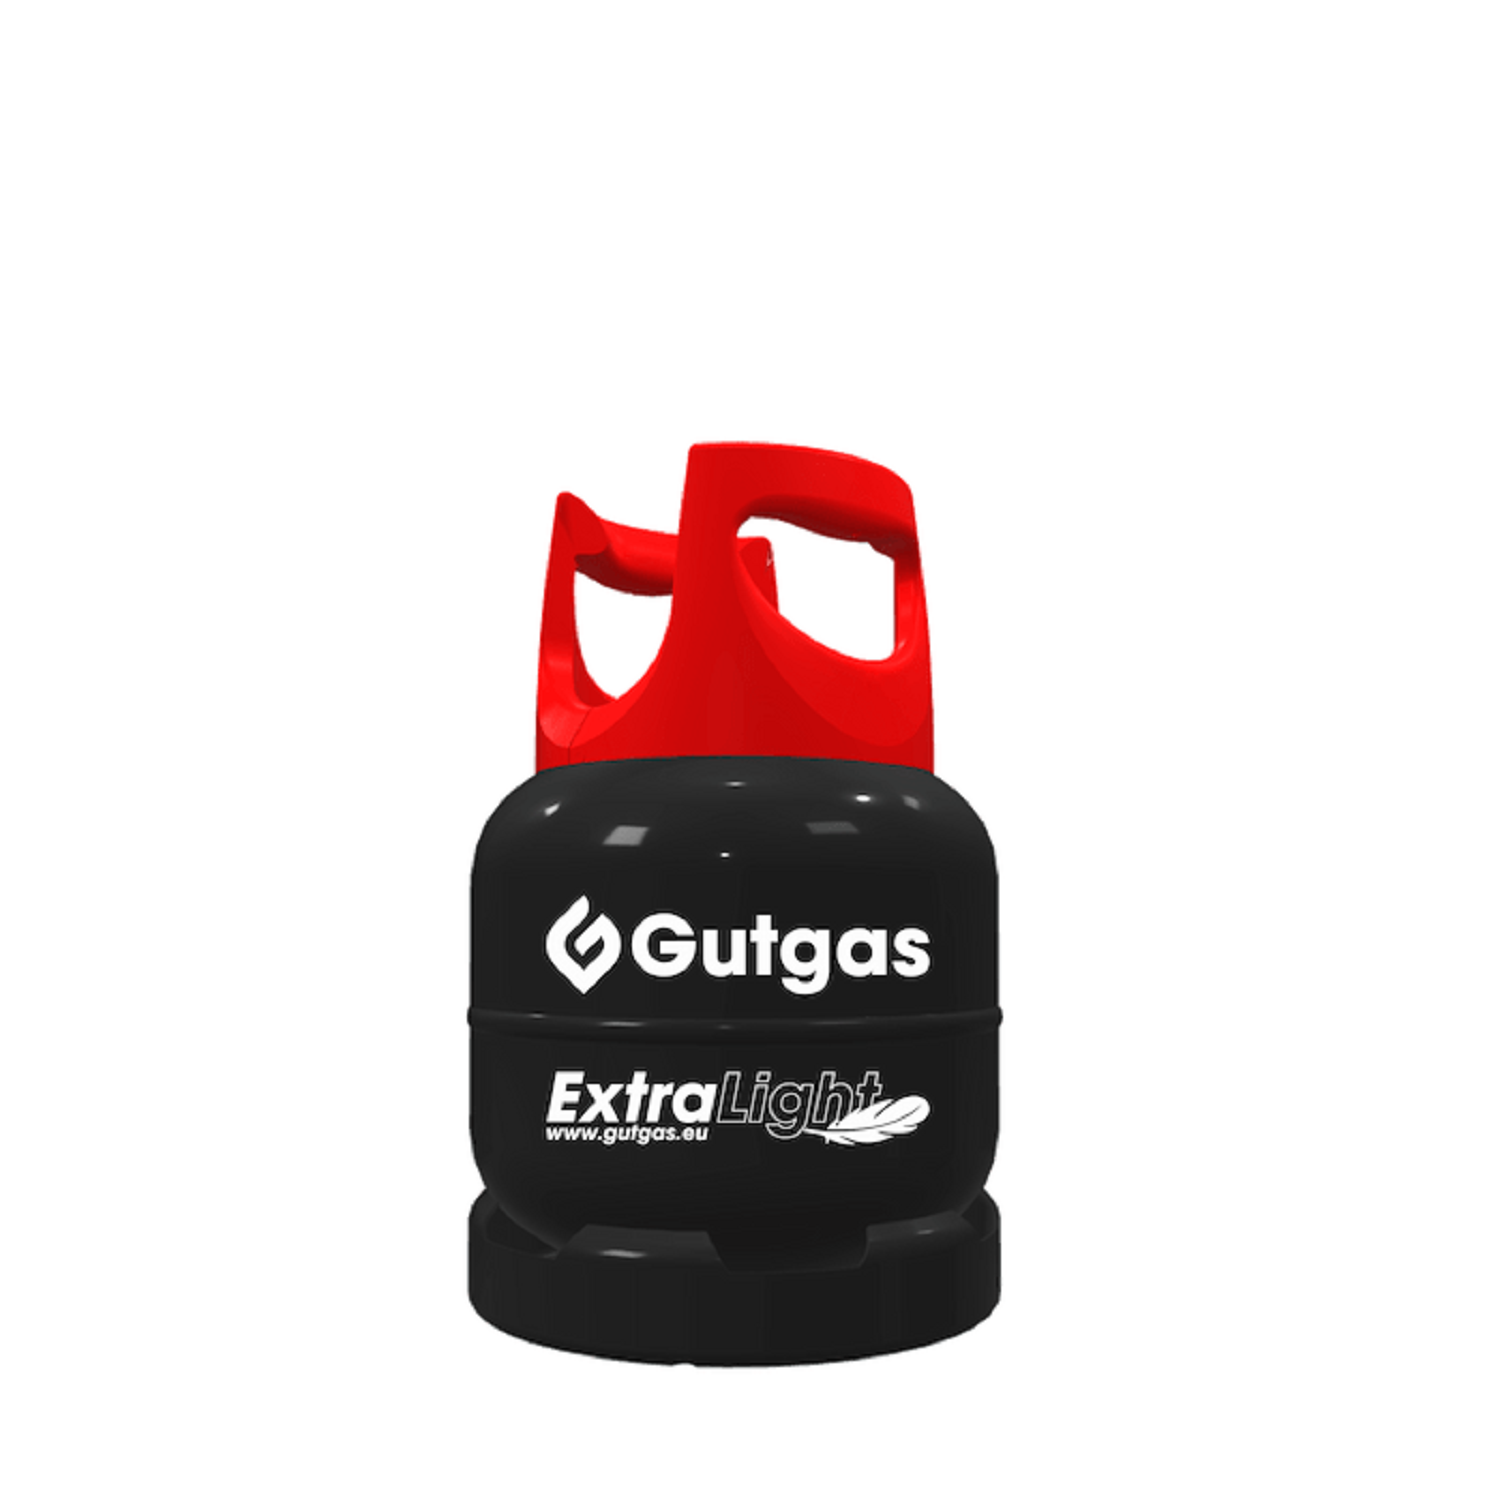 Gutgas ExtraLight თხევადი გაზის ლითონის ბალონი 9.6ლ., შავი